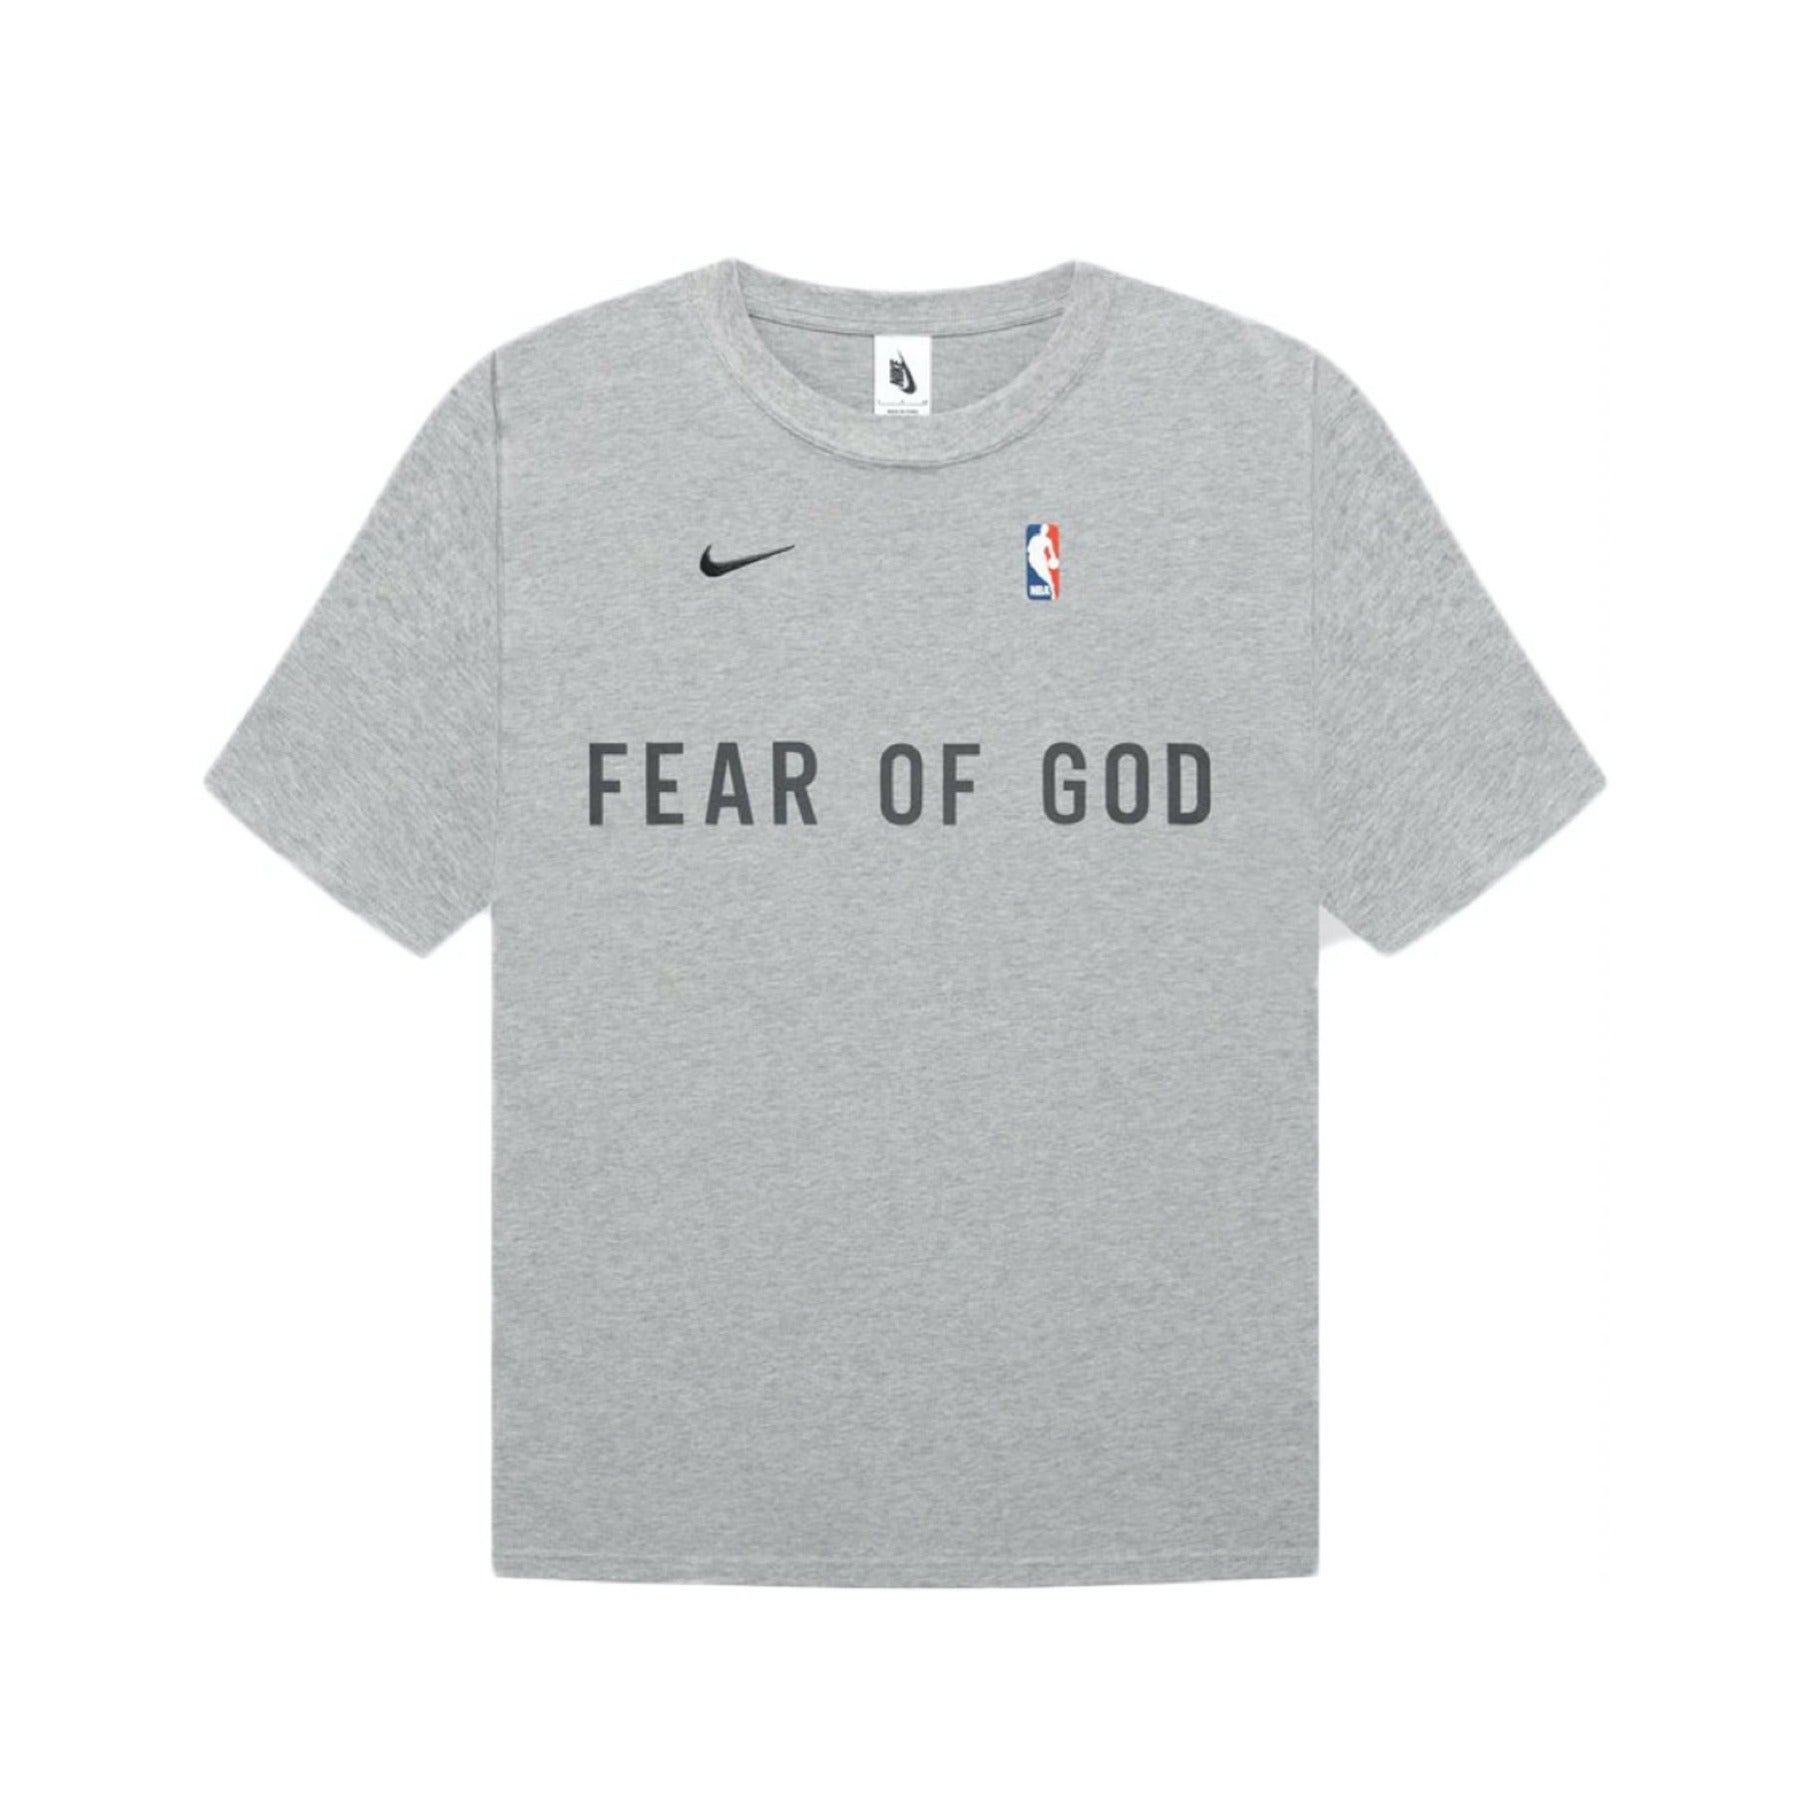 Fear of God x Nike NBA Tee